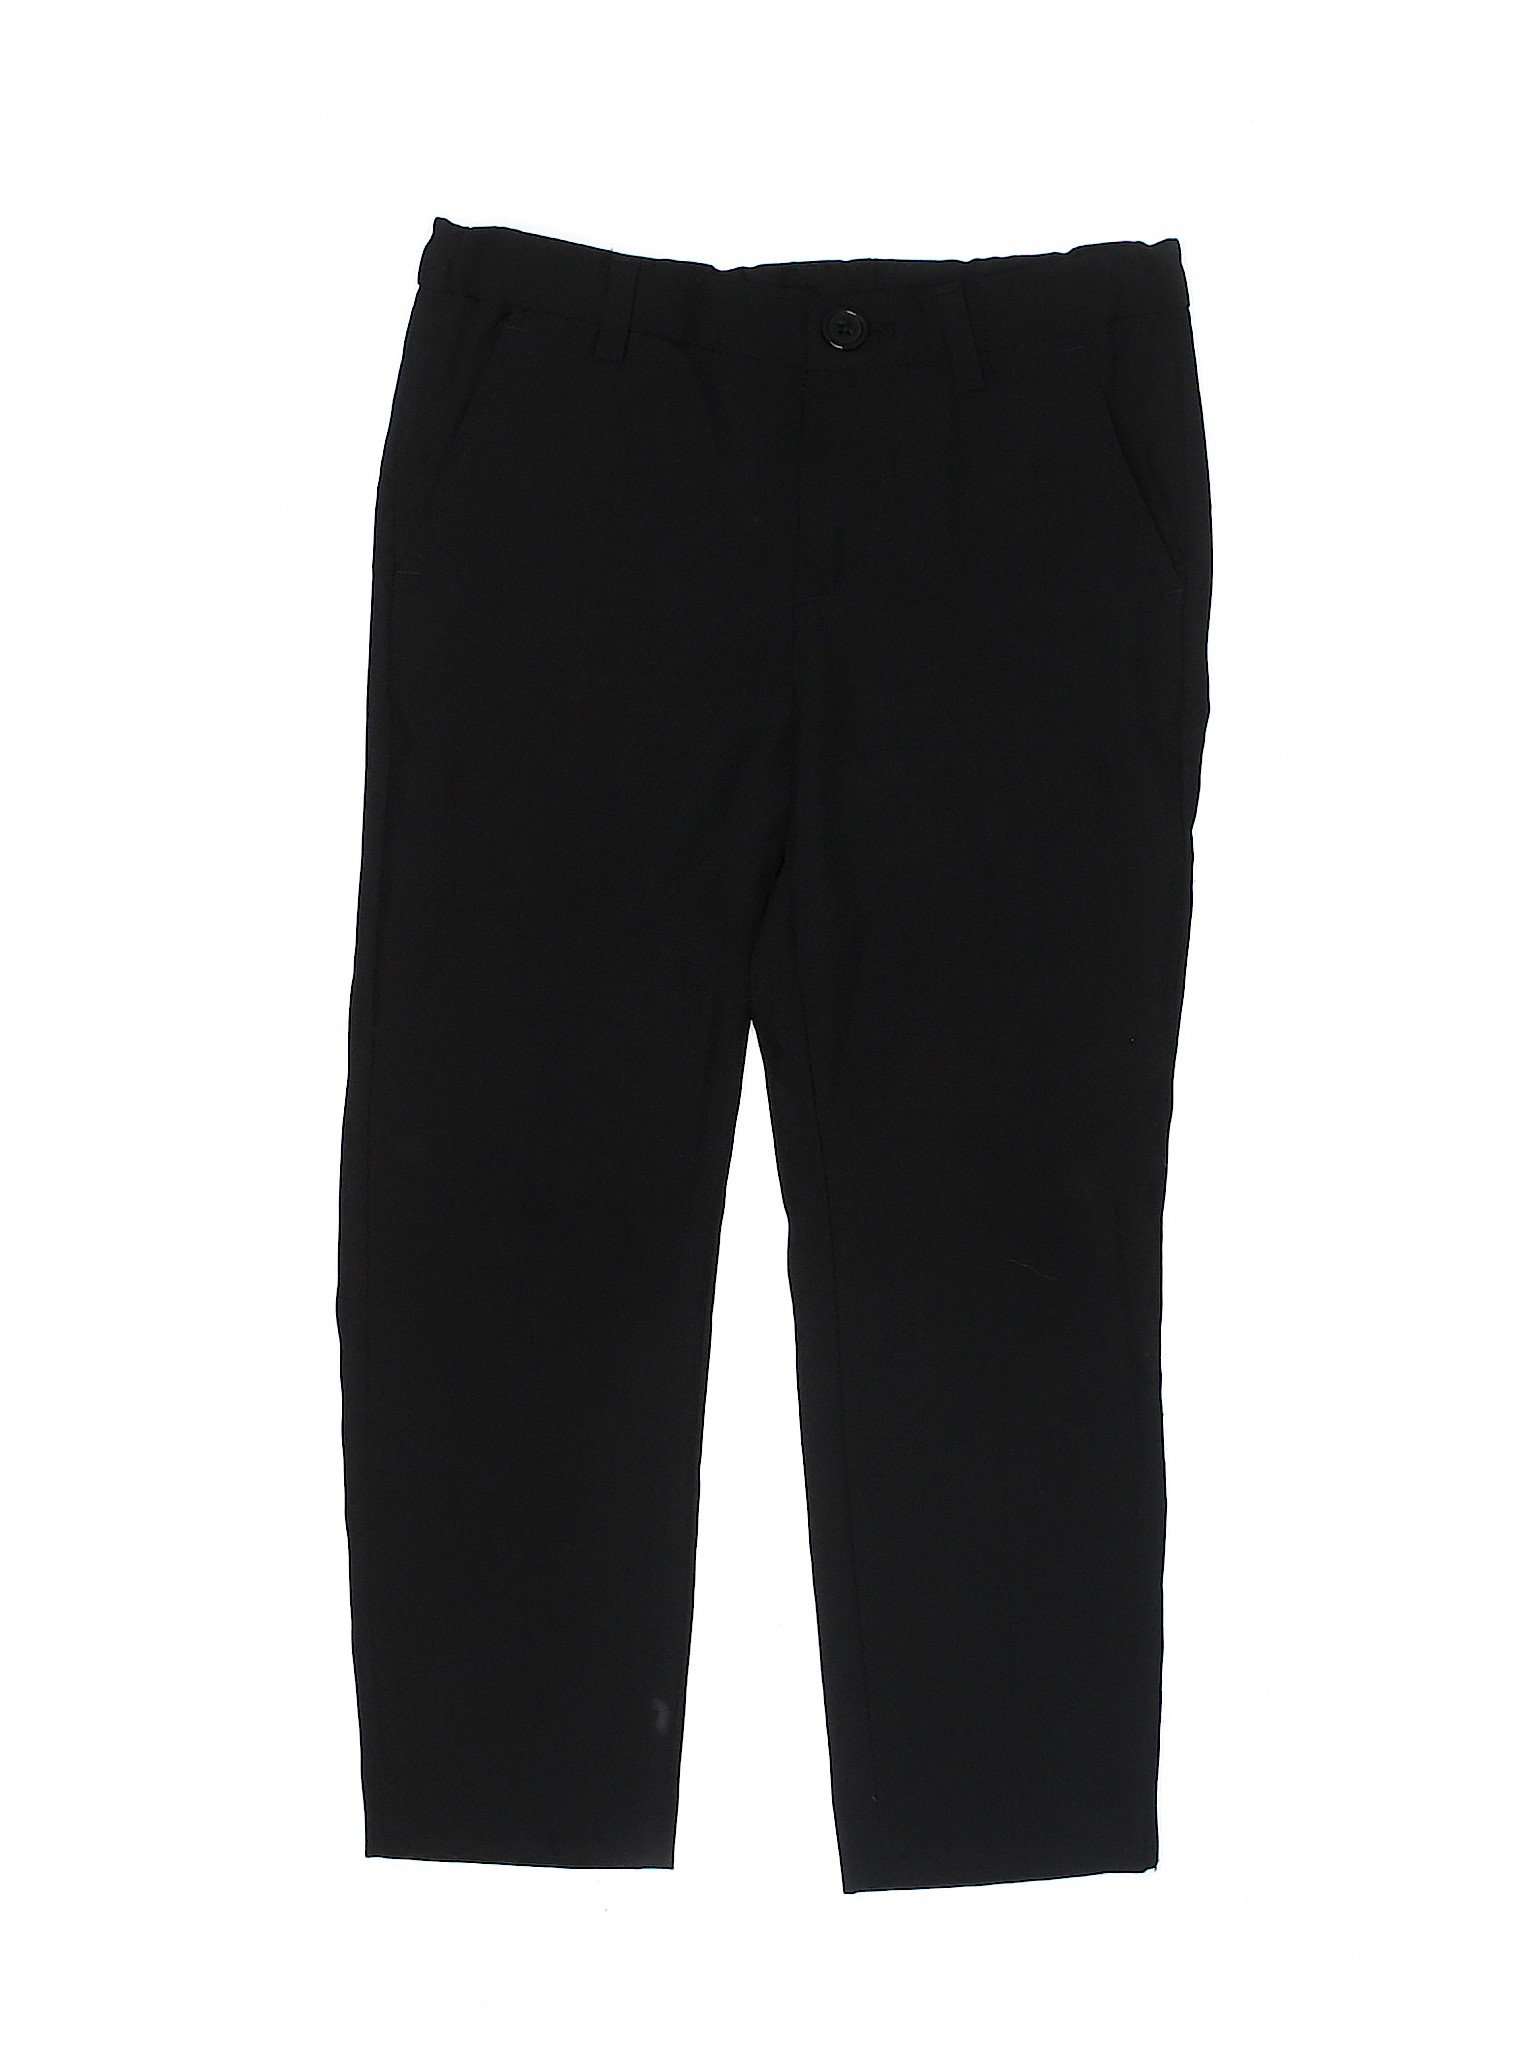 H&M Boys Black Dress Pants 3 | eBay